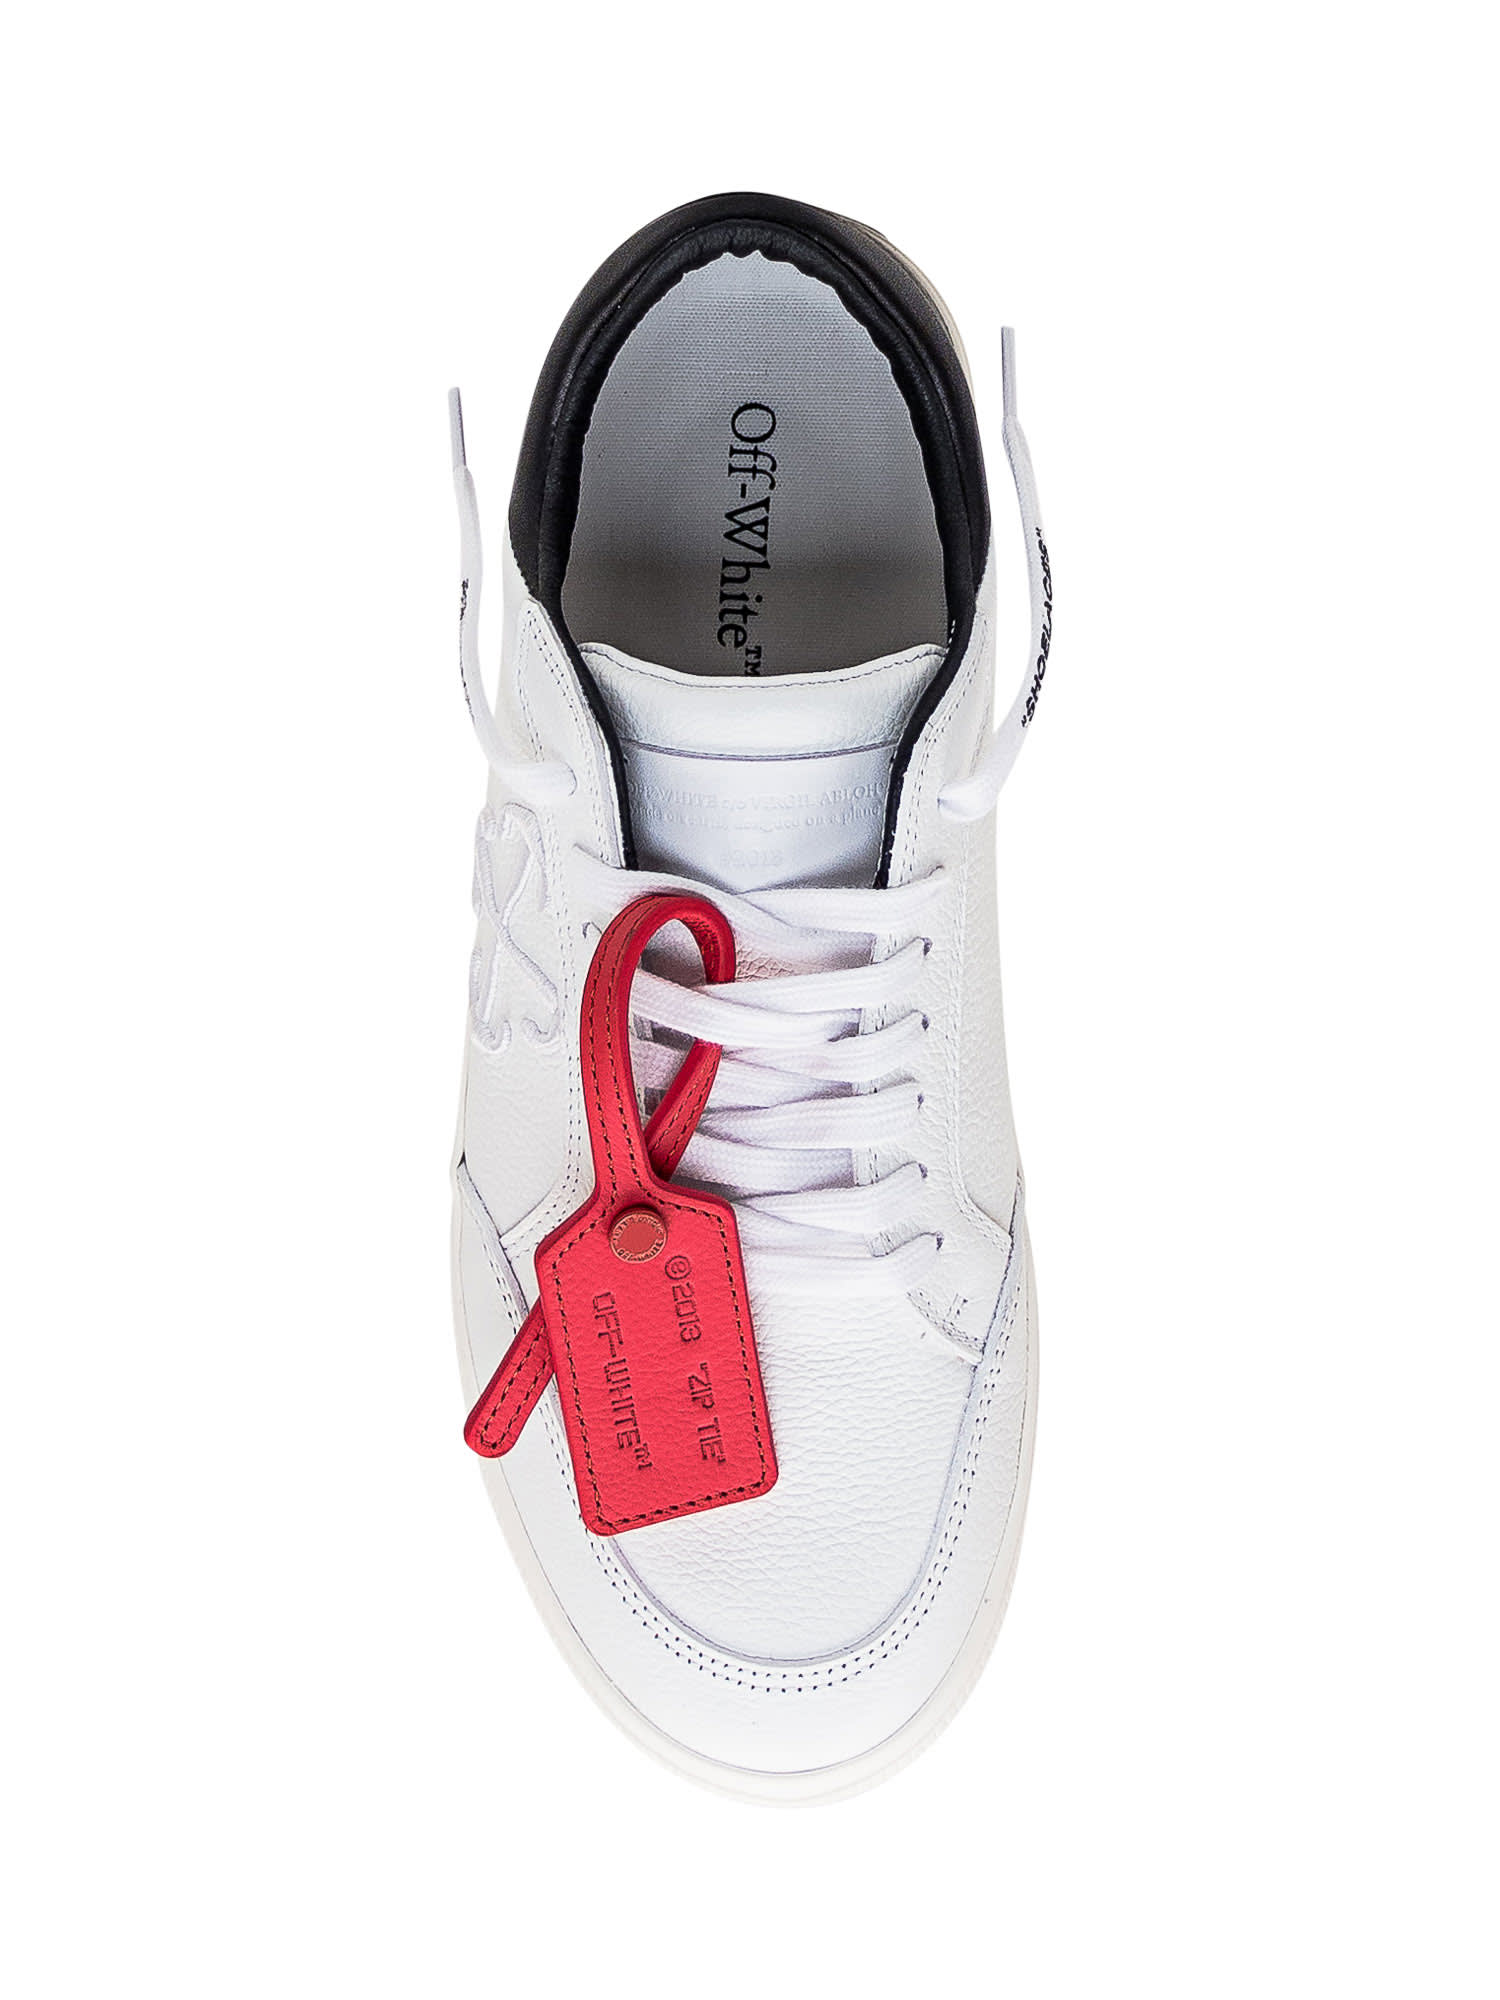 Shop Off-white New Low Vulcanized Sneaker In White/black